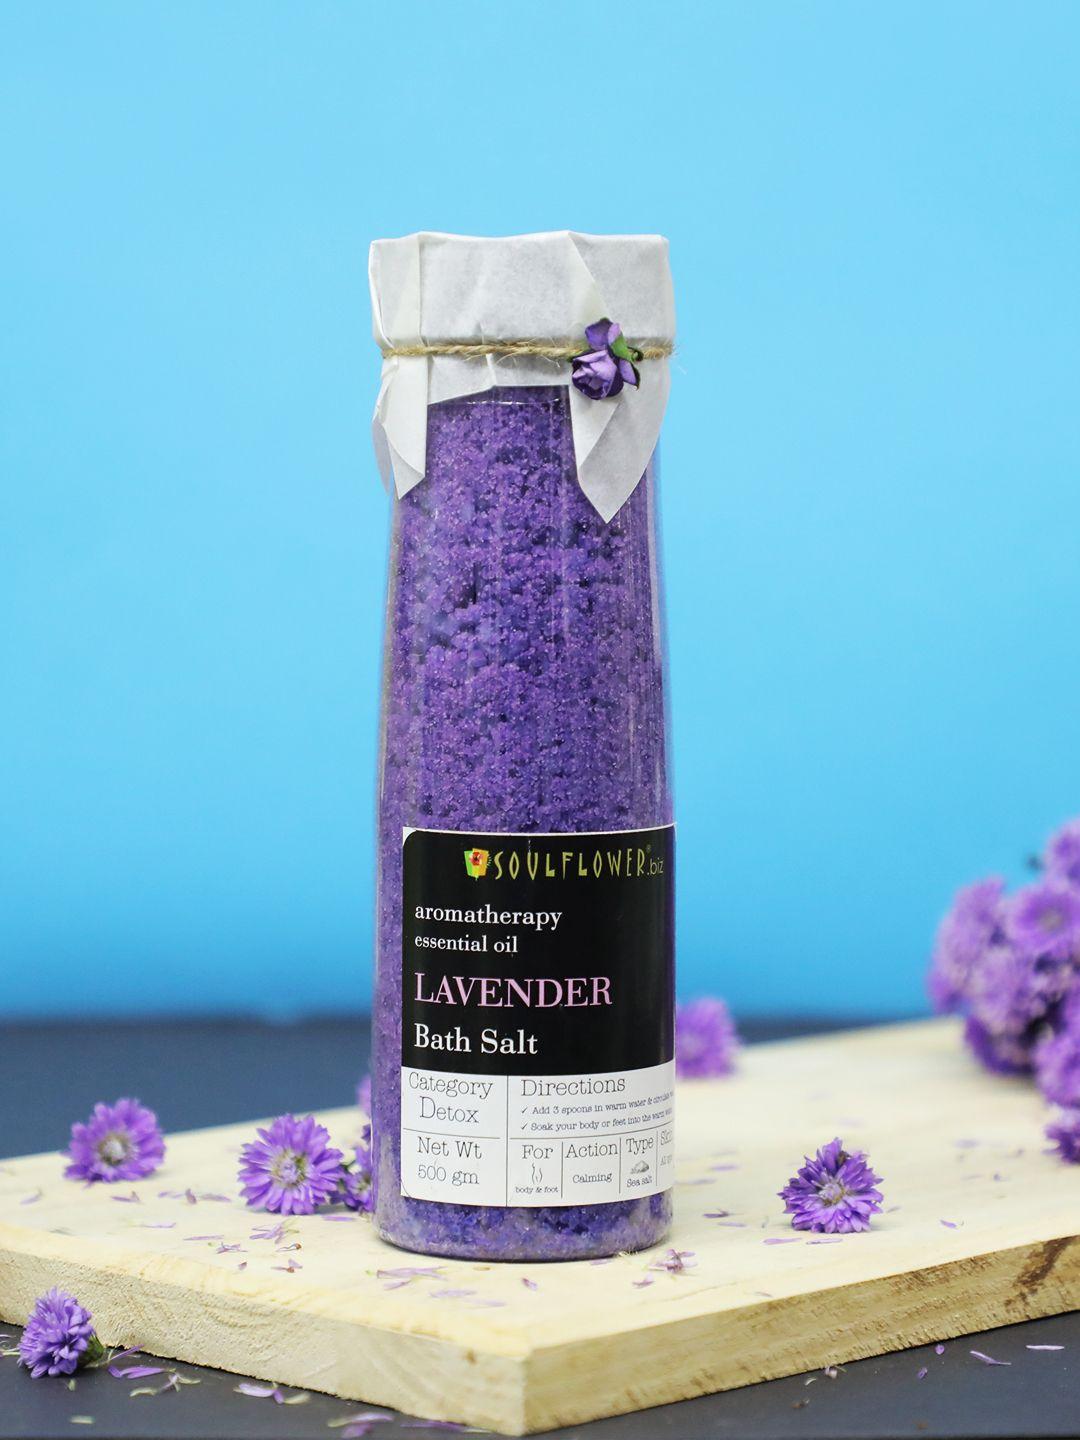 soulflower lavender bath salt for body & foot spa with lavender essential oil - 500g